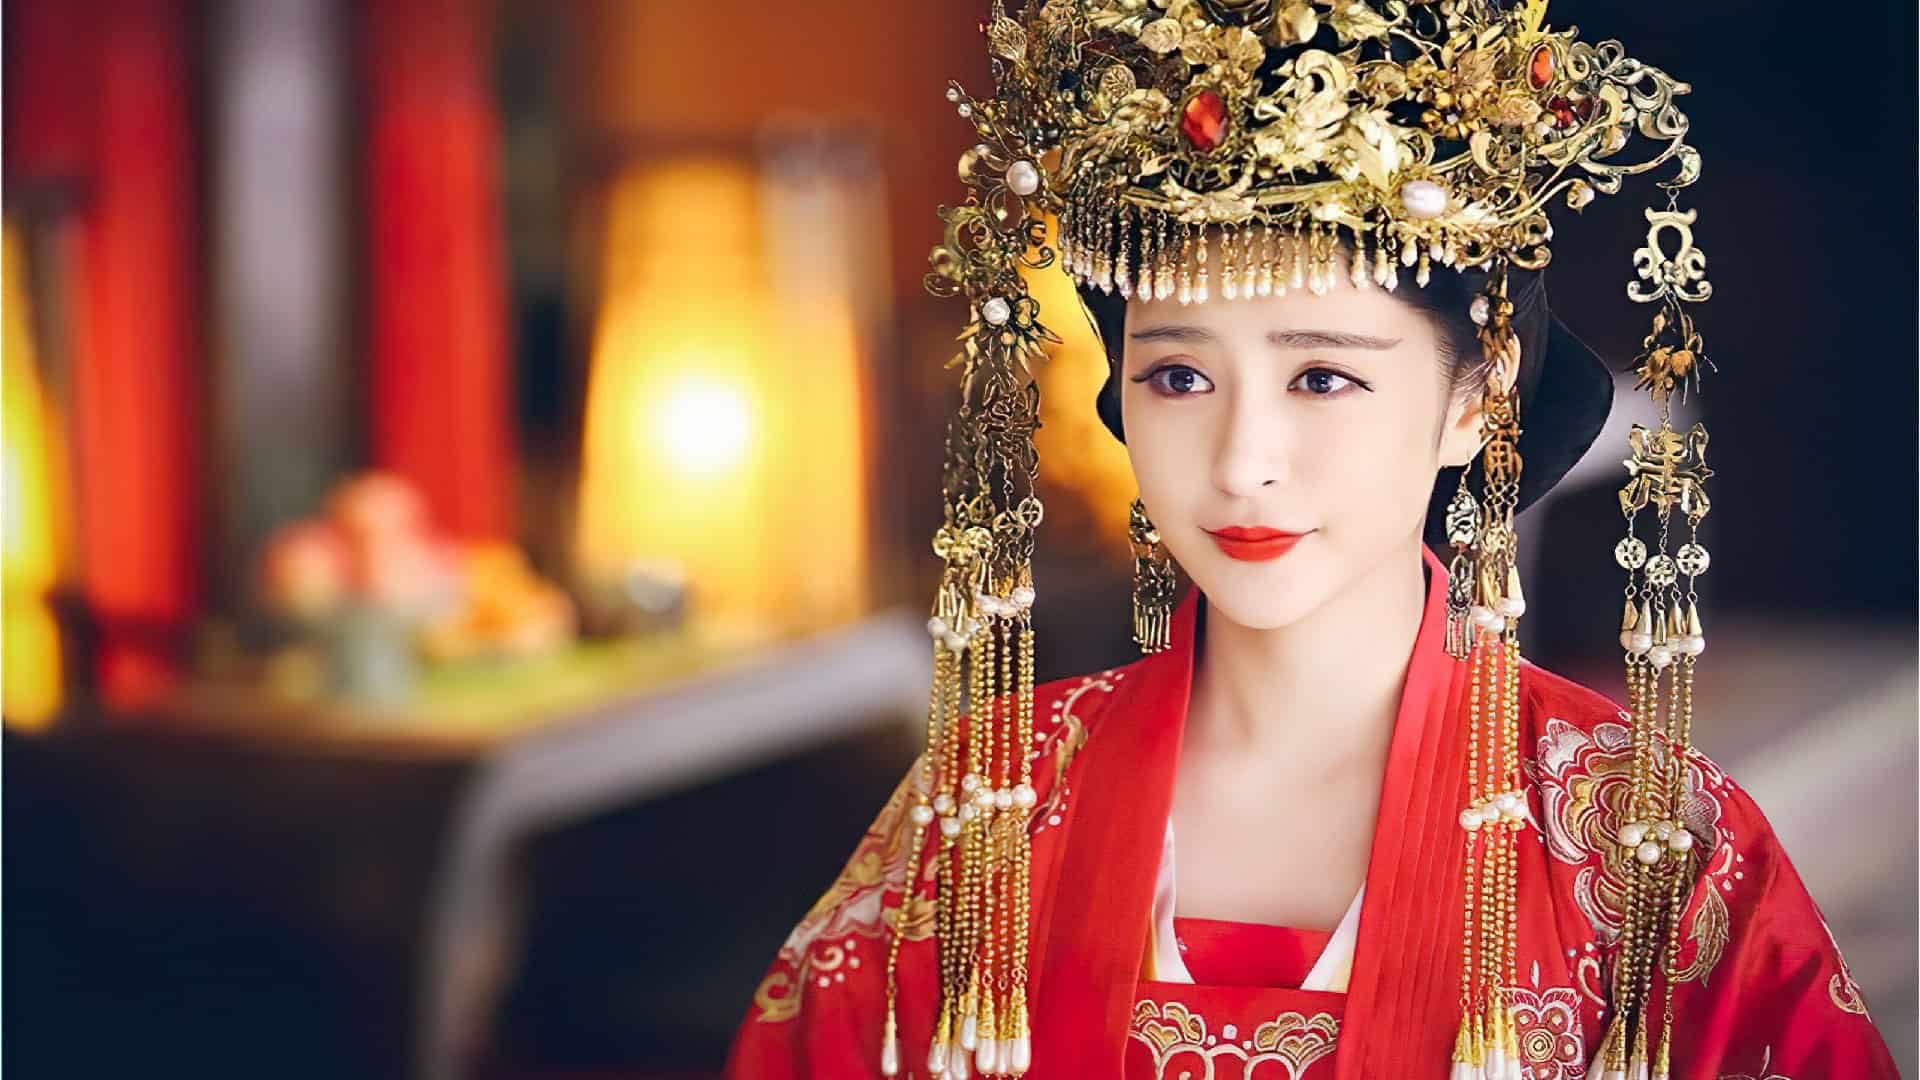 The Princess Weiyoung